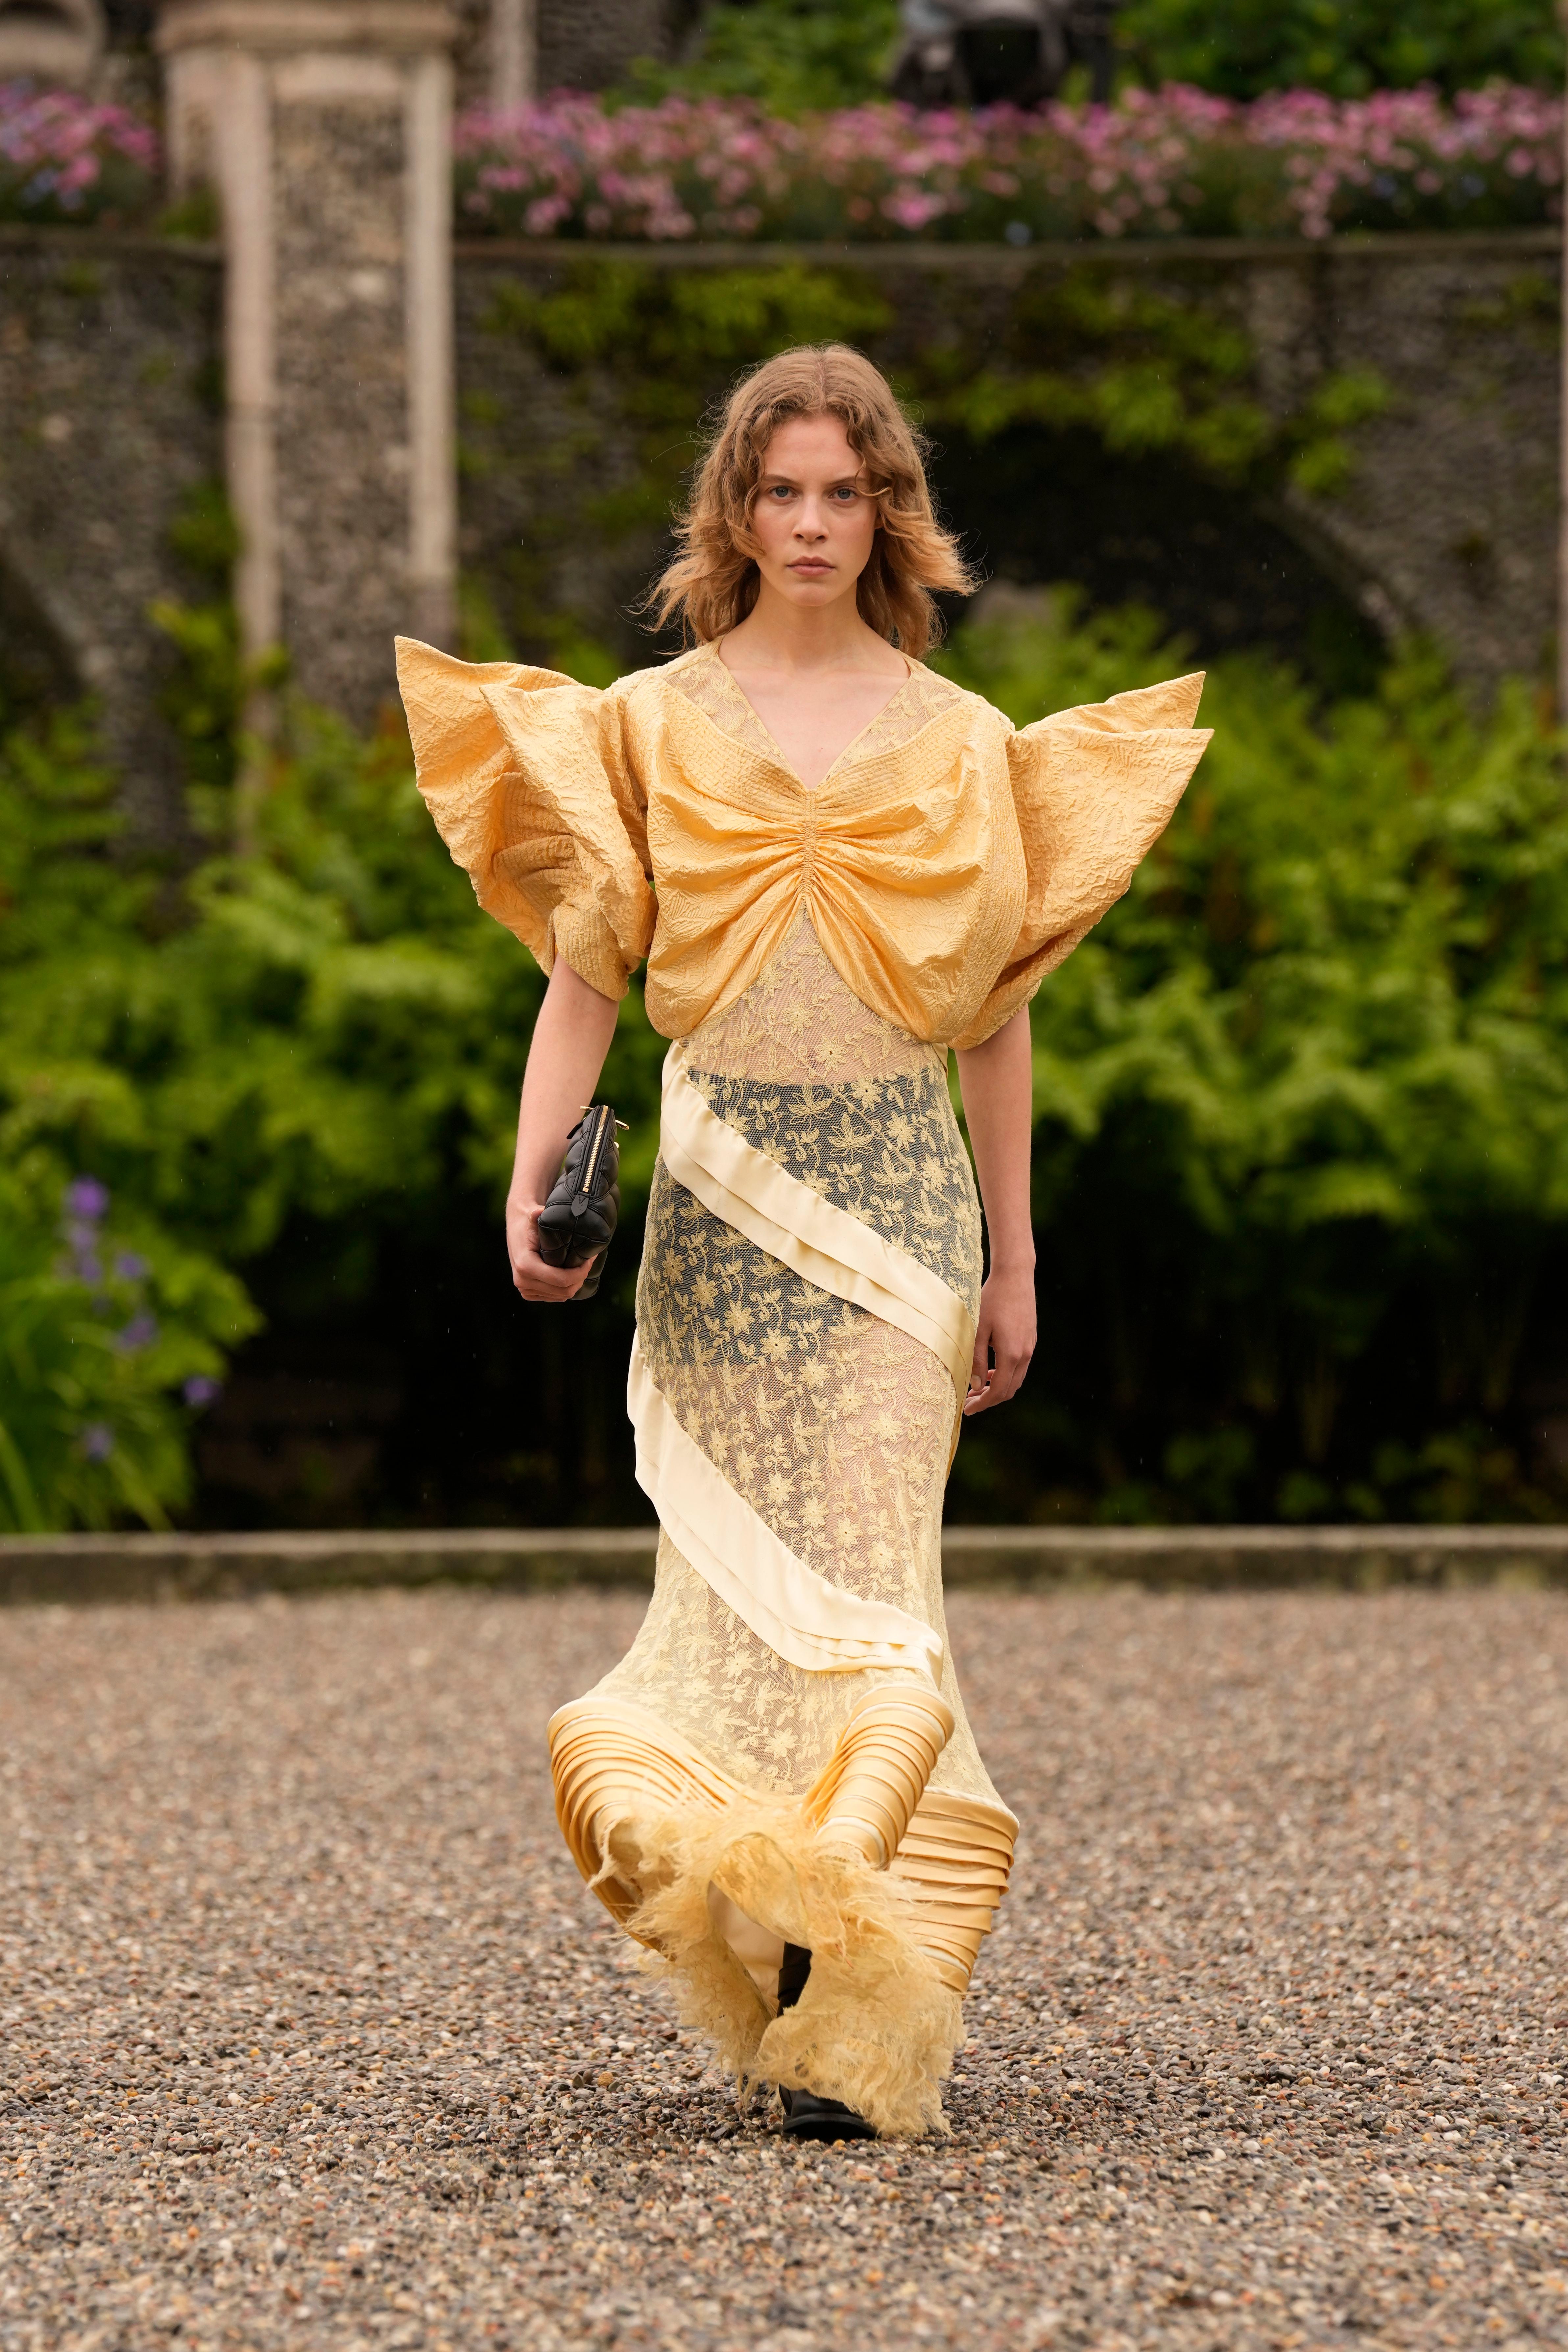 Louis Vuitton Presents a Noble Aquatic Fantasy in Isola Bella for